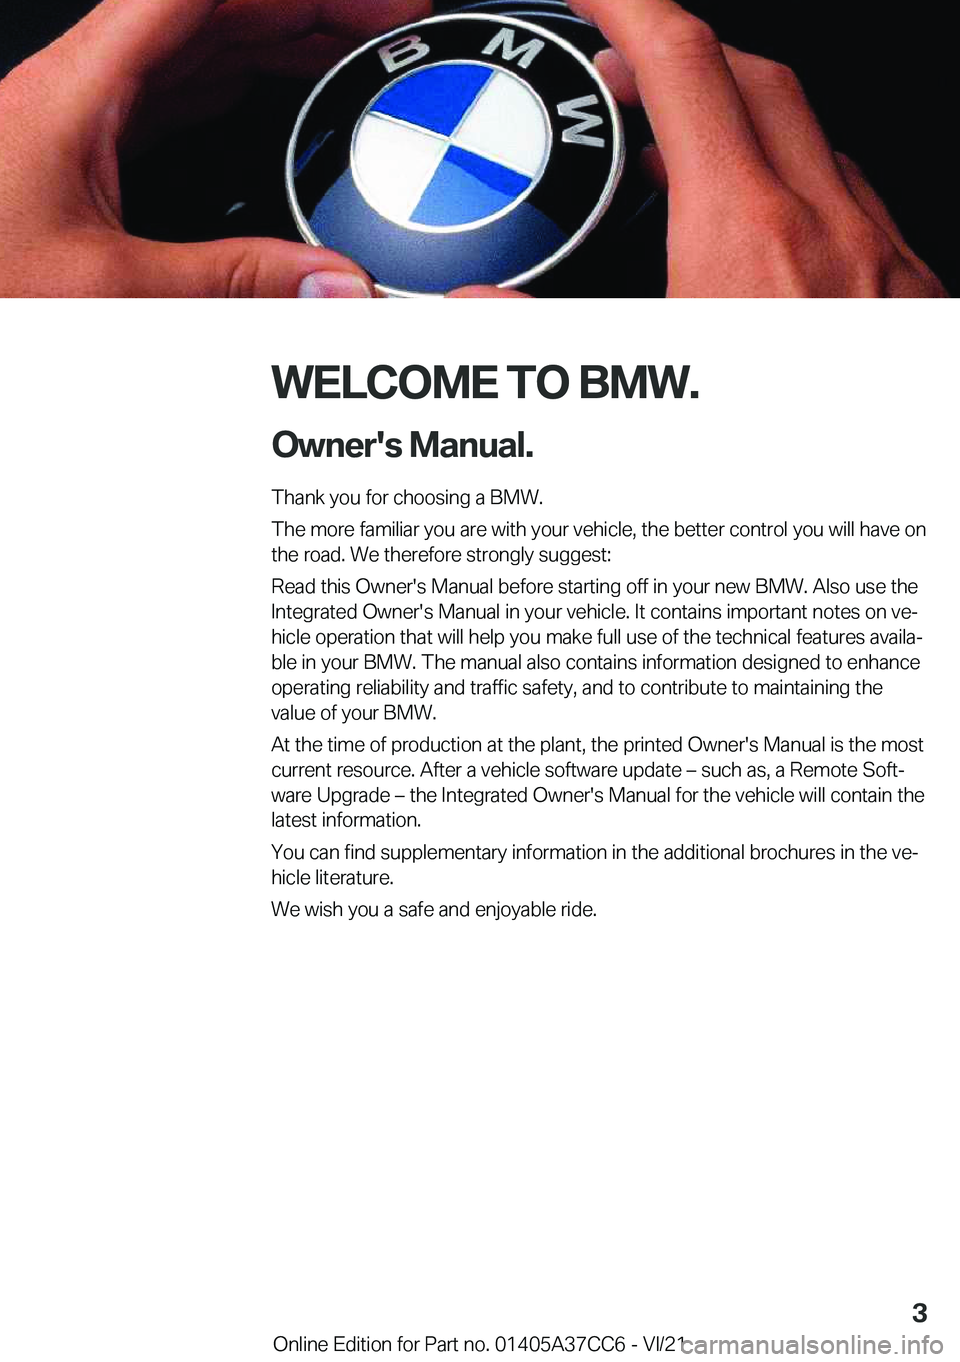 BMW X4 2022  Owners Manual �W�E�L�C�O�M�E��T�O��B�M�W�.�O�w�n�e�r�'�s��M�a�n�u�a�l�.
�T�h�a�n�k��y�o�u��f�o�r��c�h�o�o�s�i�n�g��a��B�M�W�.
�T�h�e��m�o�r�e��f�a�m�i�l�i�a�r��y�o�u��a�r�e��w�i�t�h��y�o�u�r��v�e